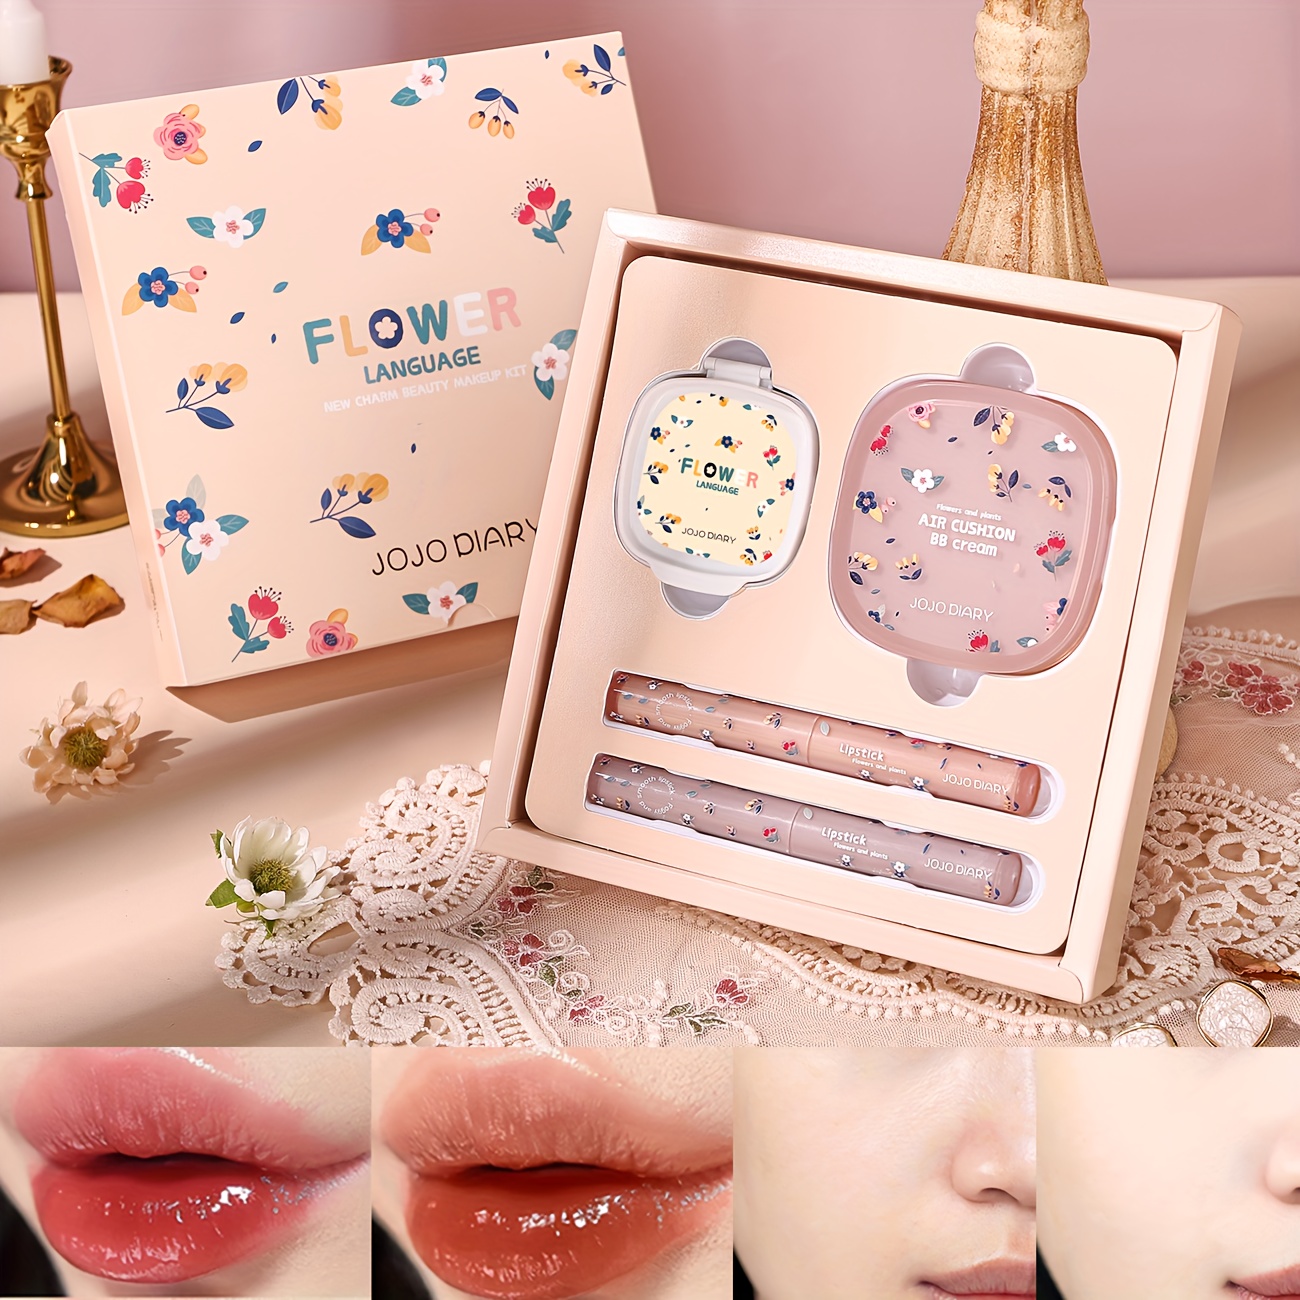 Kit de maquillaje + caja de regalo / 15 productos super prom